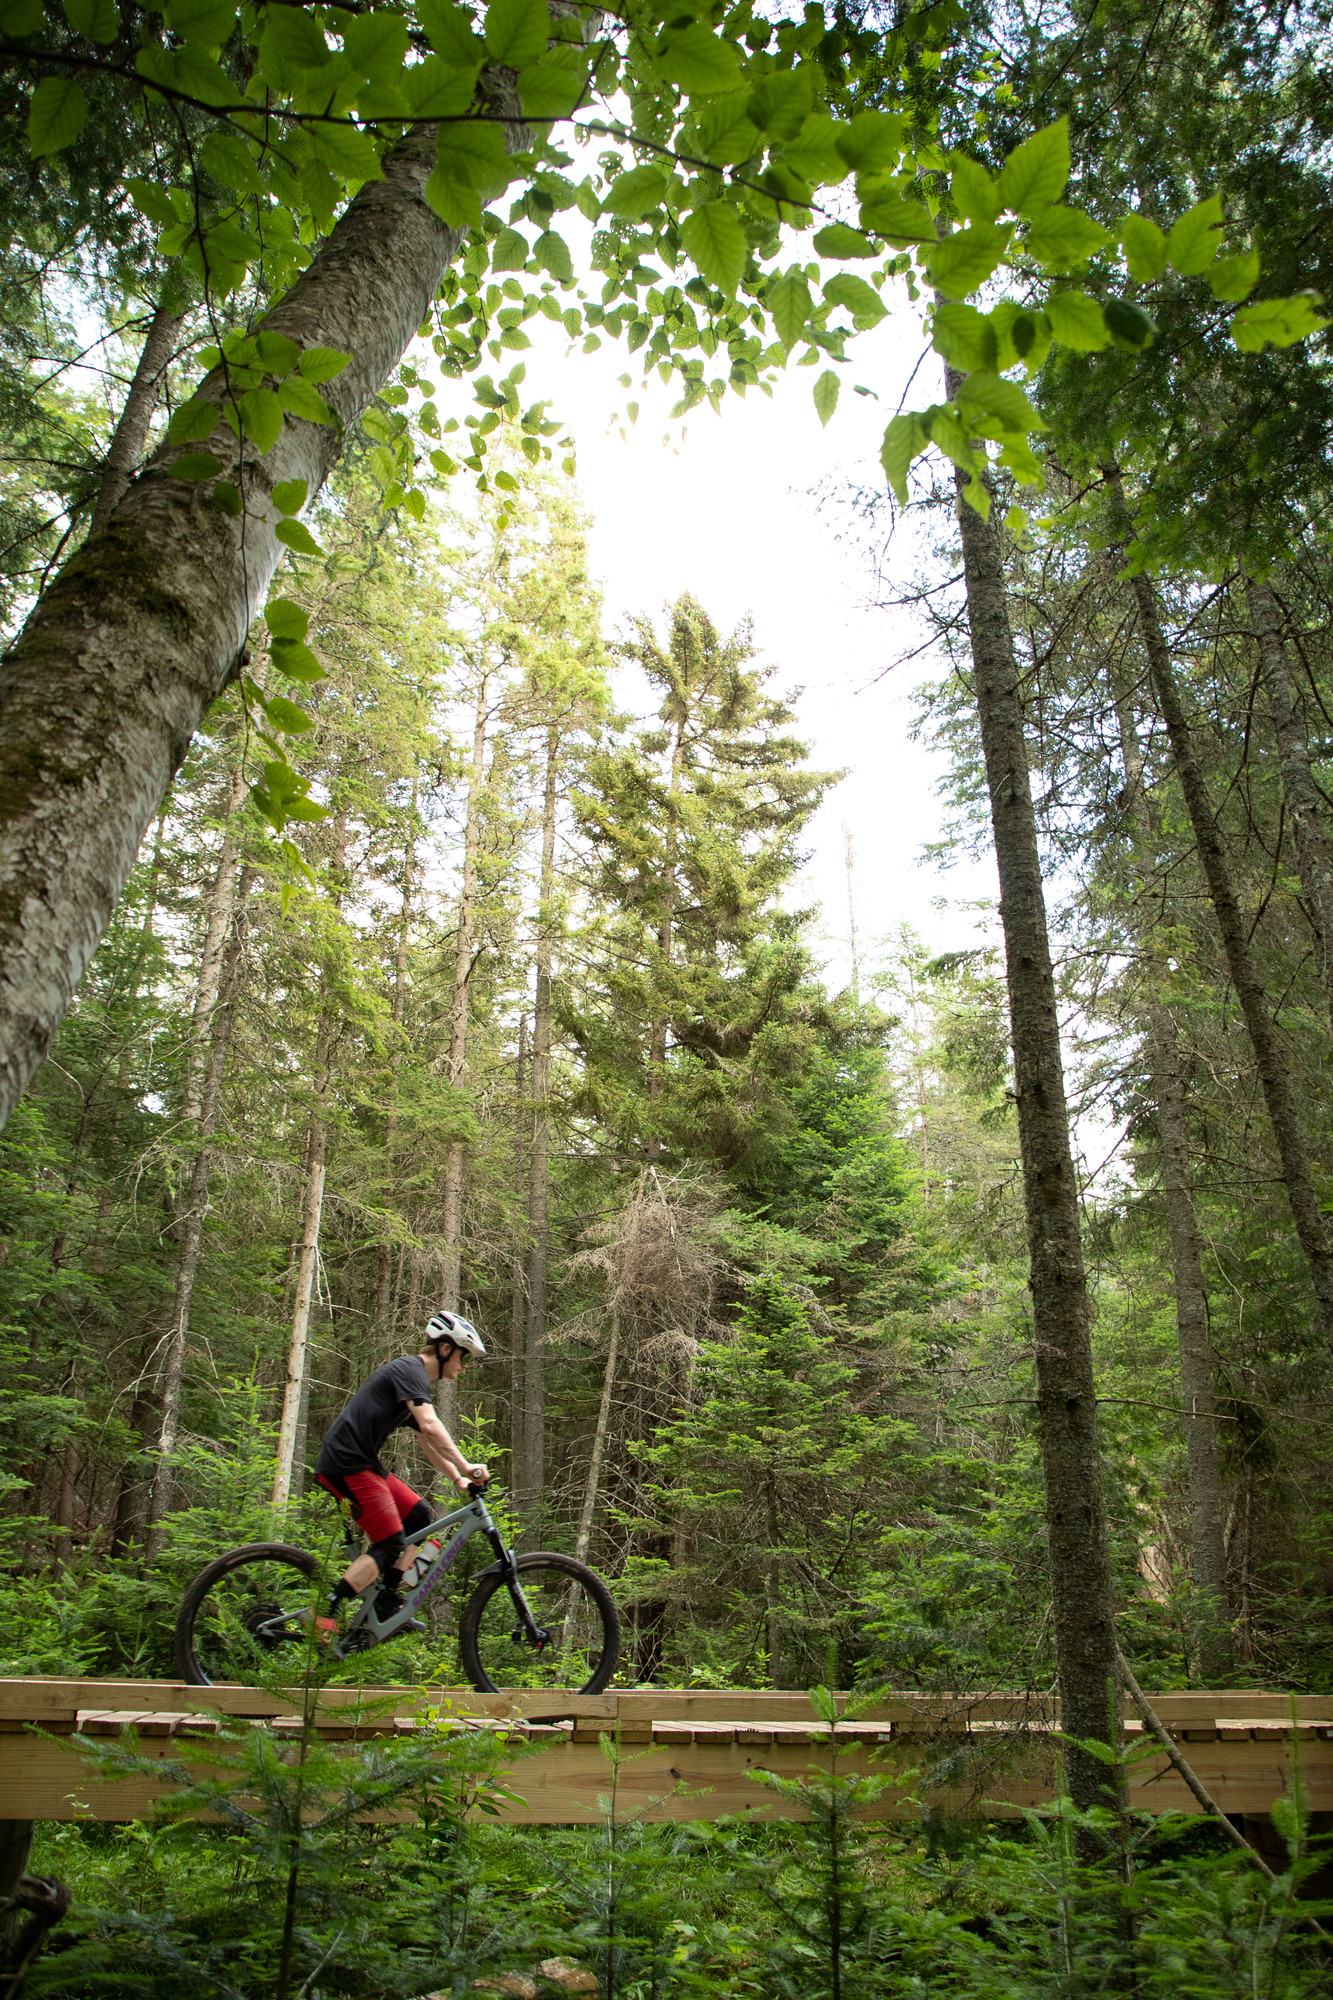 A man rides his mountain bike on a trail through the woods